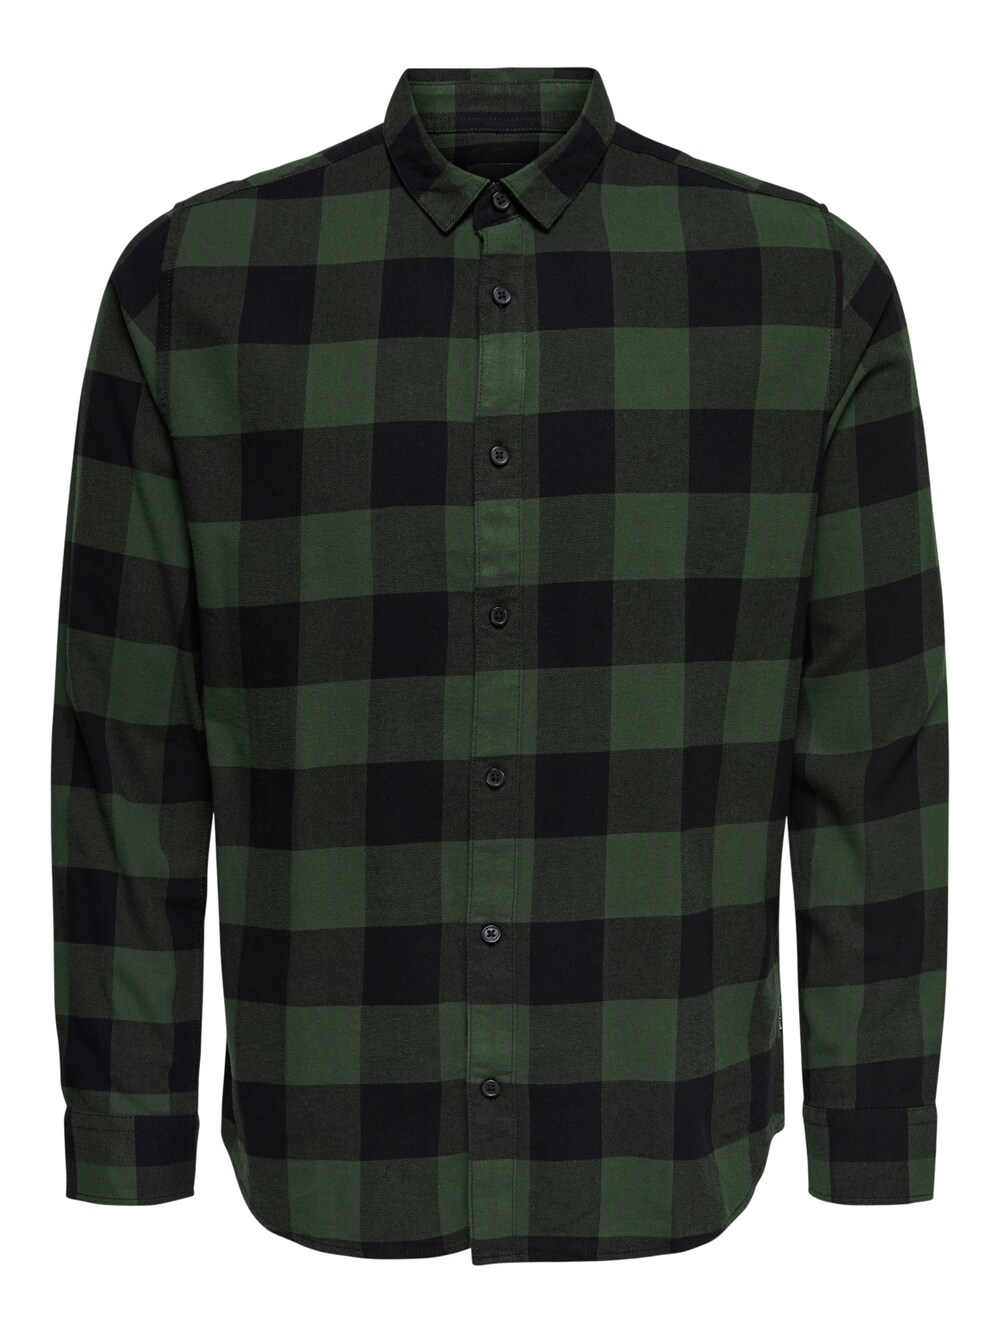 Рубашка узкого кроя на пуговицах Only & Sons Gudmund, темно-зеленый